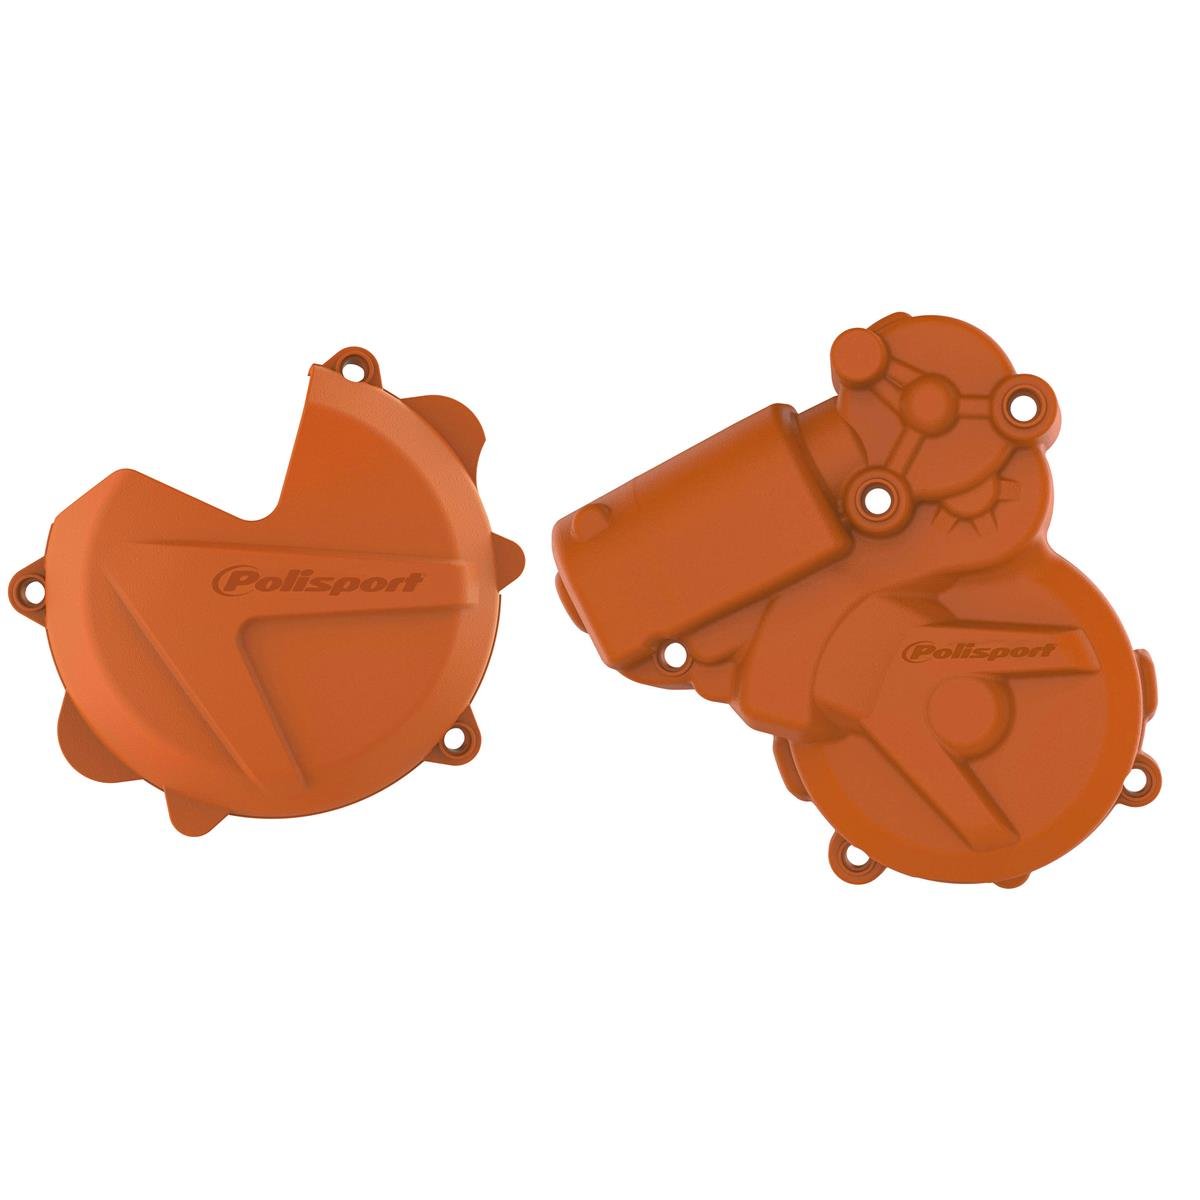 Polisport Clutch/Ignition Cover Protection  KTM EXC 250/300 13-16, Orange